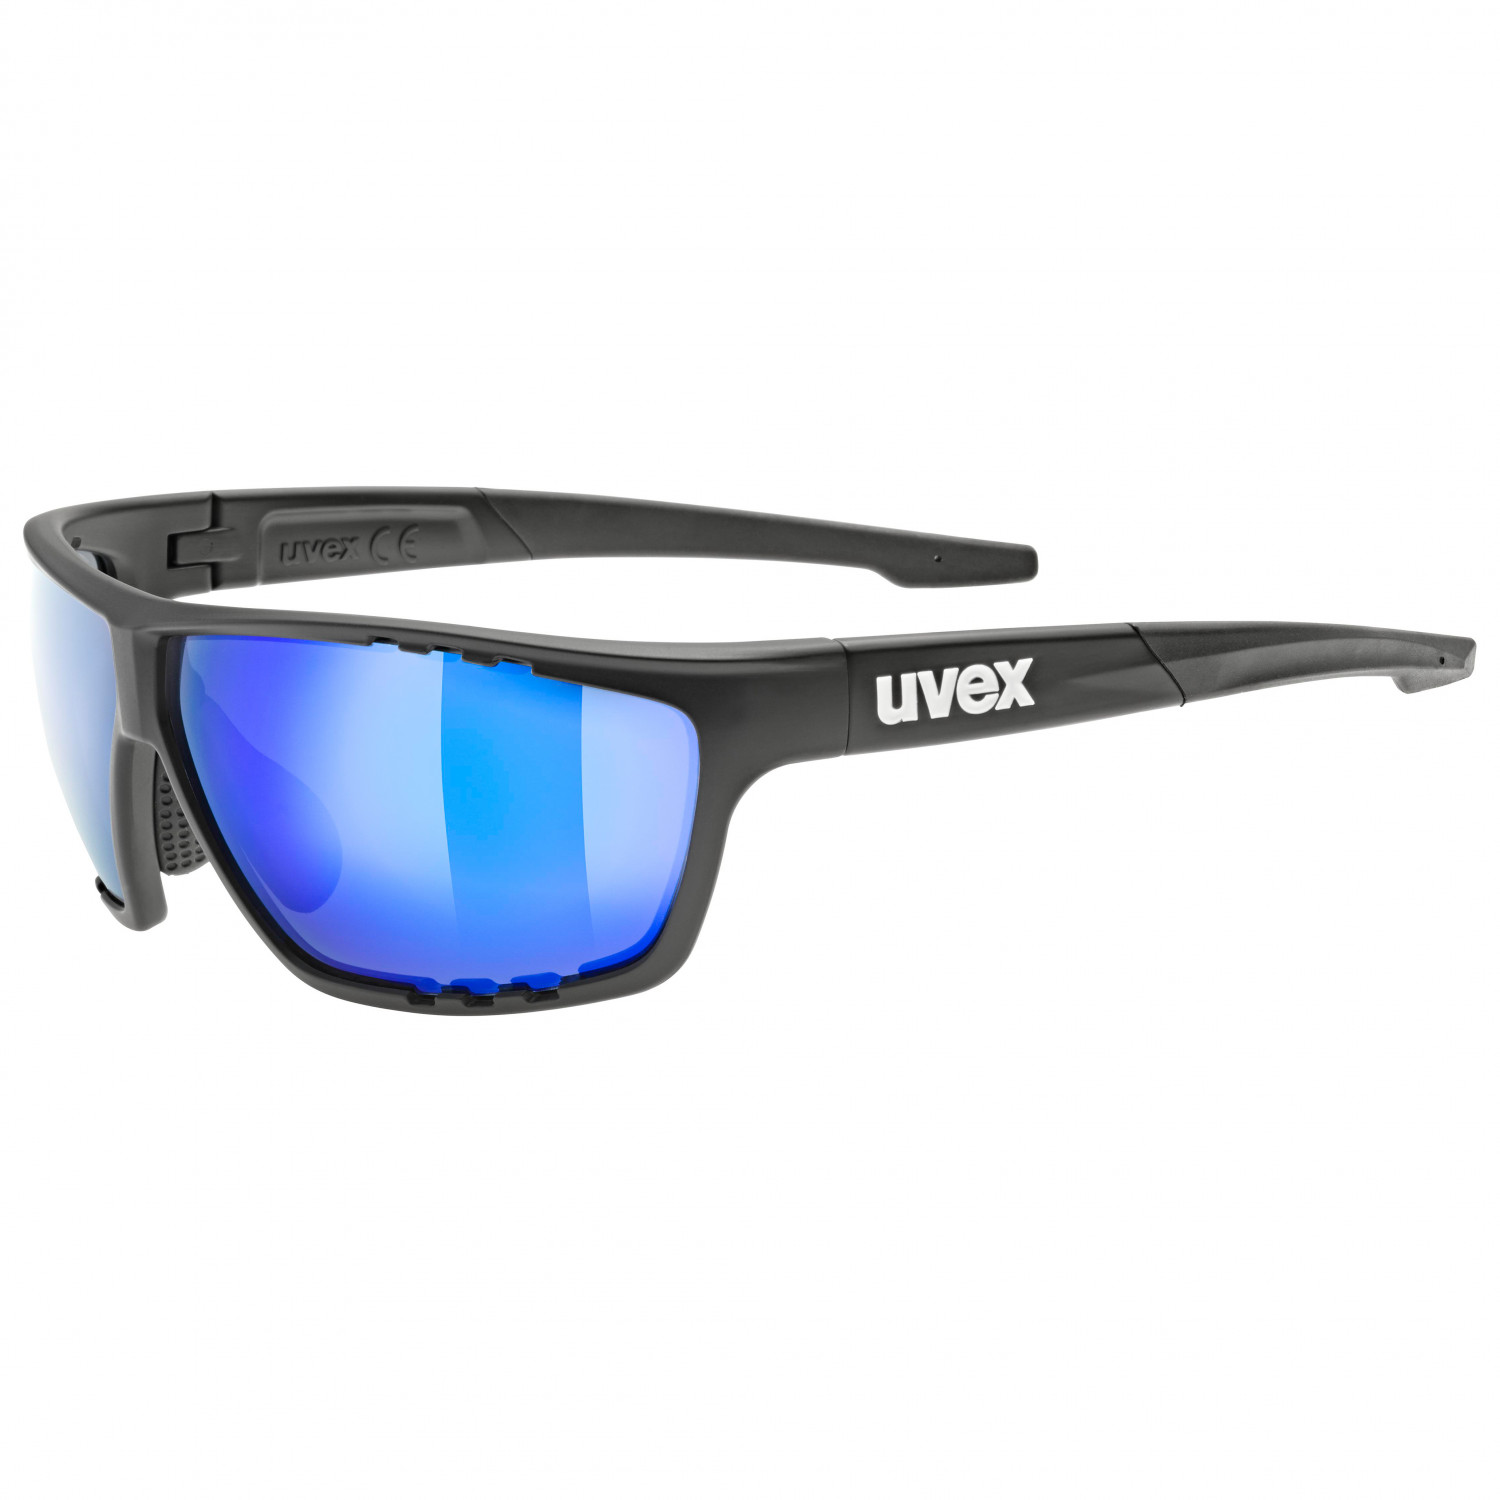 Солнцезащитные очки Uvex Sportstyle 706 Mirror Cat 3, цвет Black Mat солнцезащитные очки uvex lgl 39 mirror cat 3 цвет grey mat blue